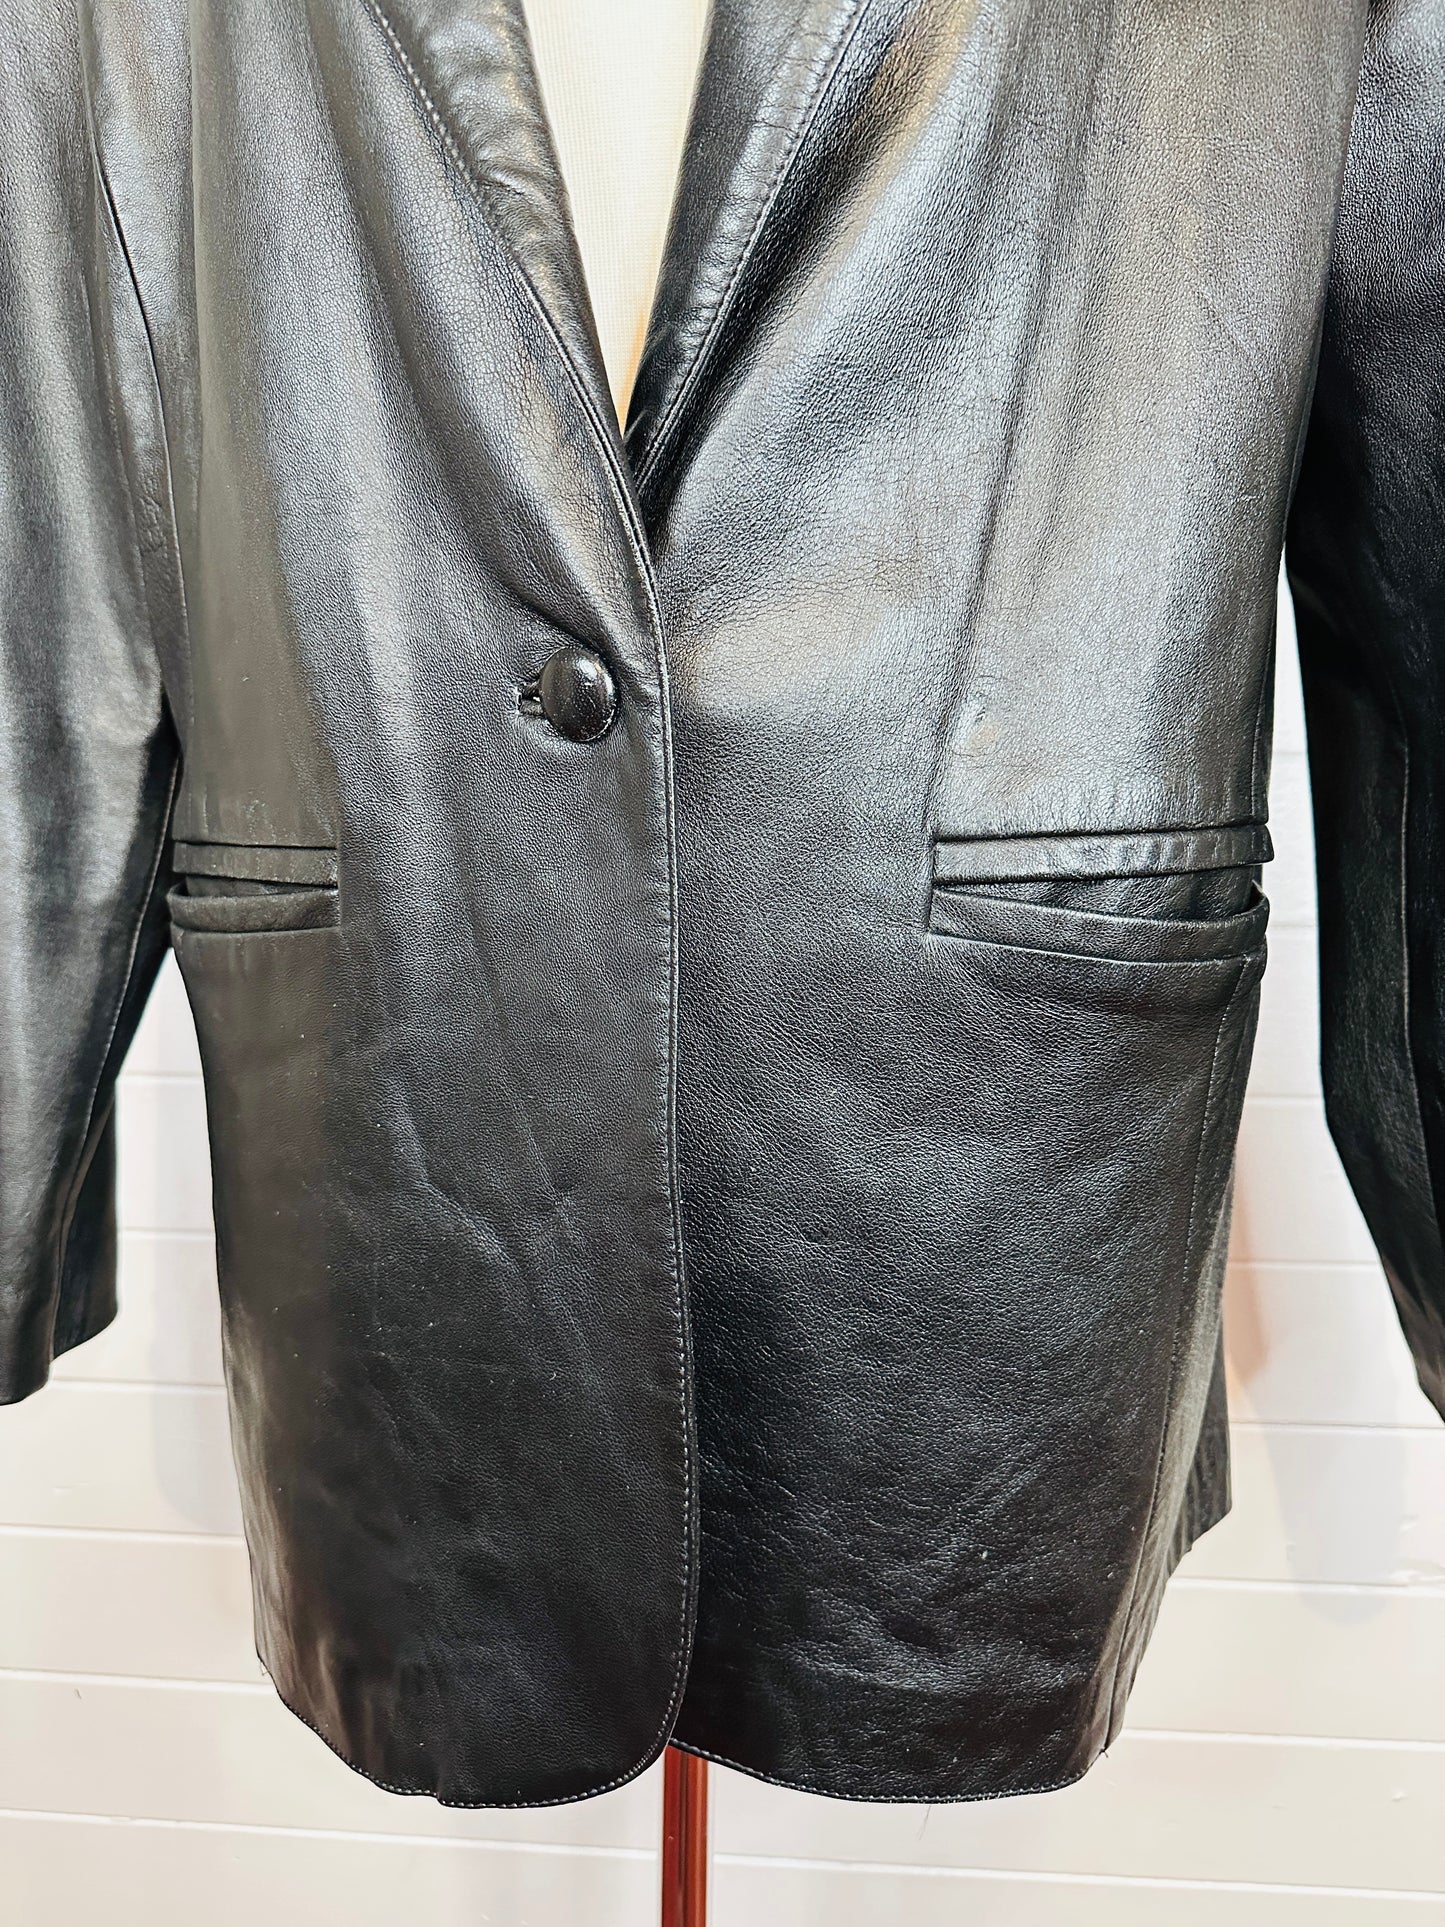 1980's Women's Black Leather Blazer by The Room of St. Regis (L)